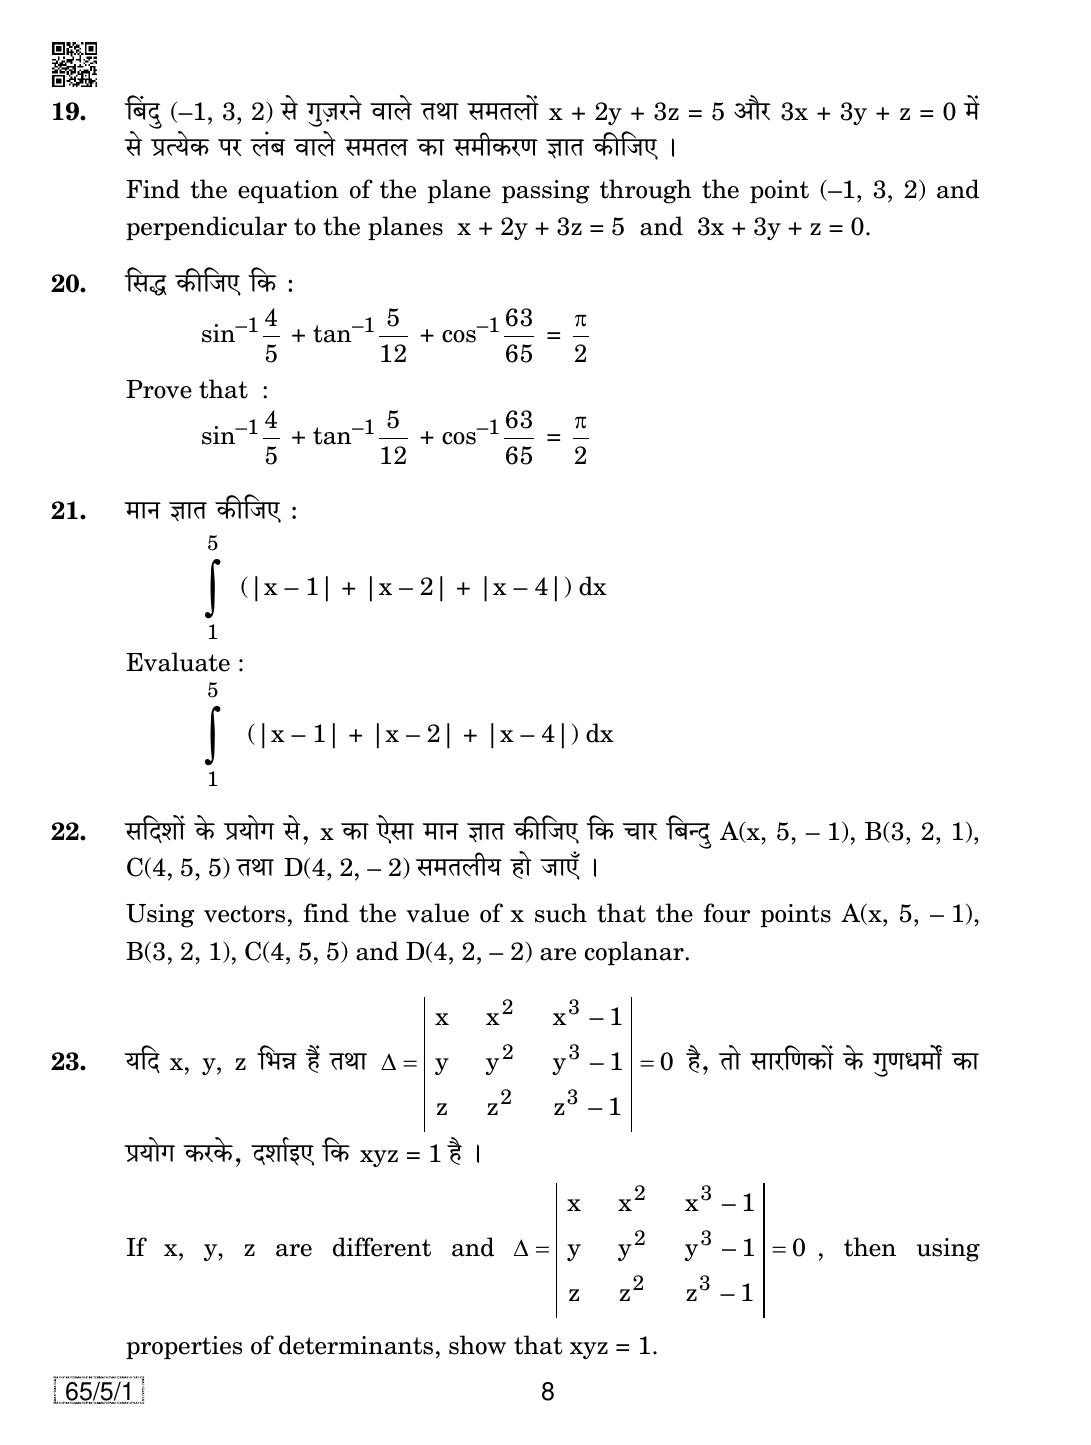 CBSE Class 12 65-5-1 Mathematics 2019 Question Paper - Page 8